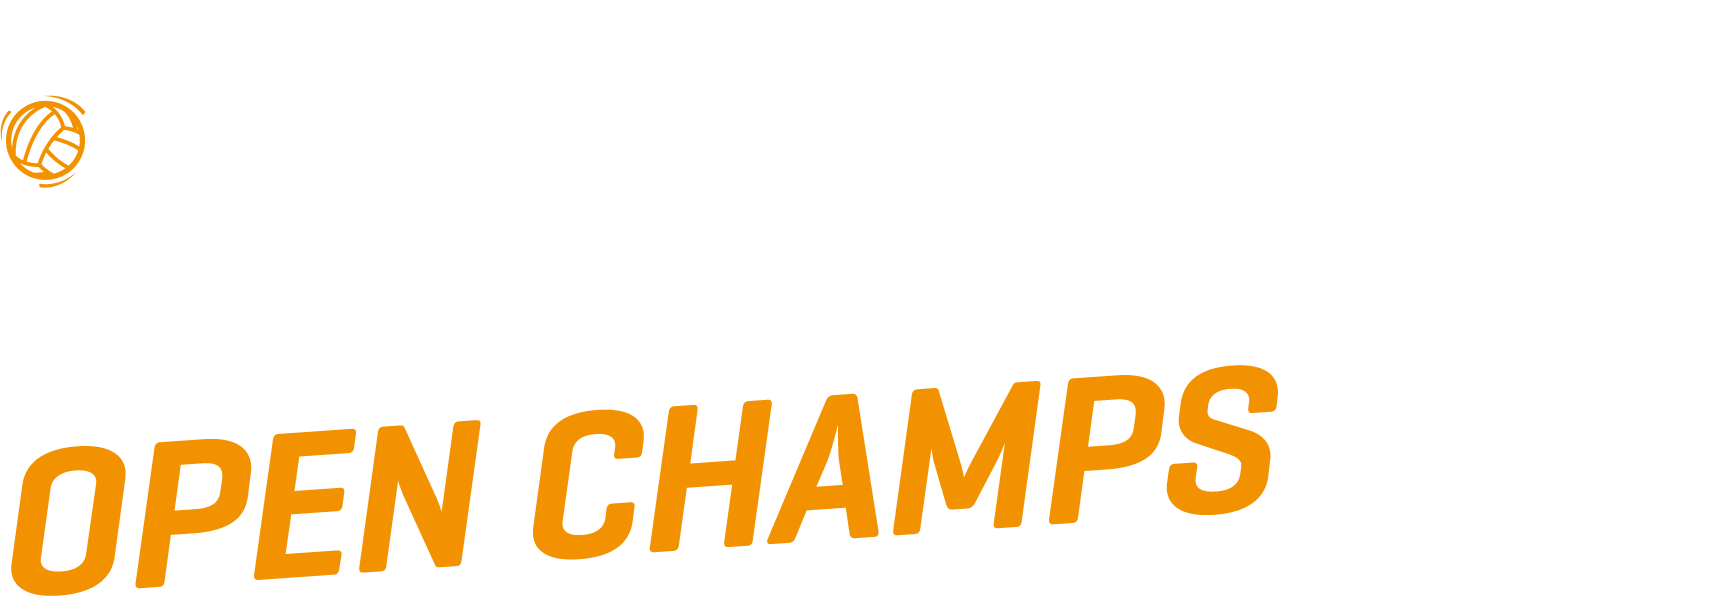 NS NZ Open Champs Logo Reversed1